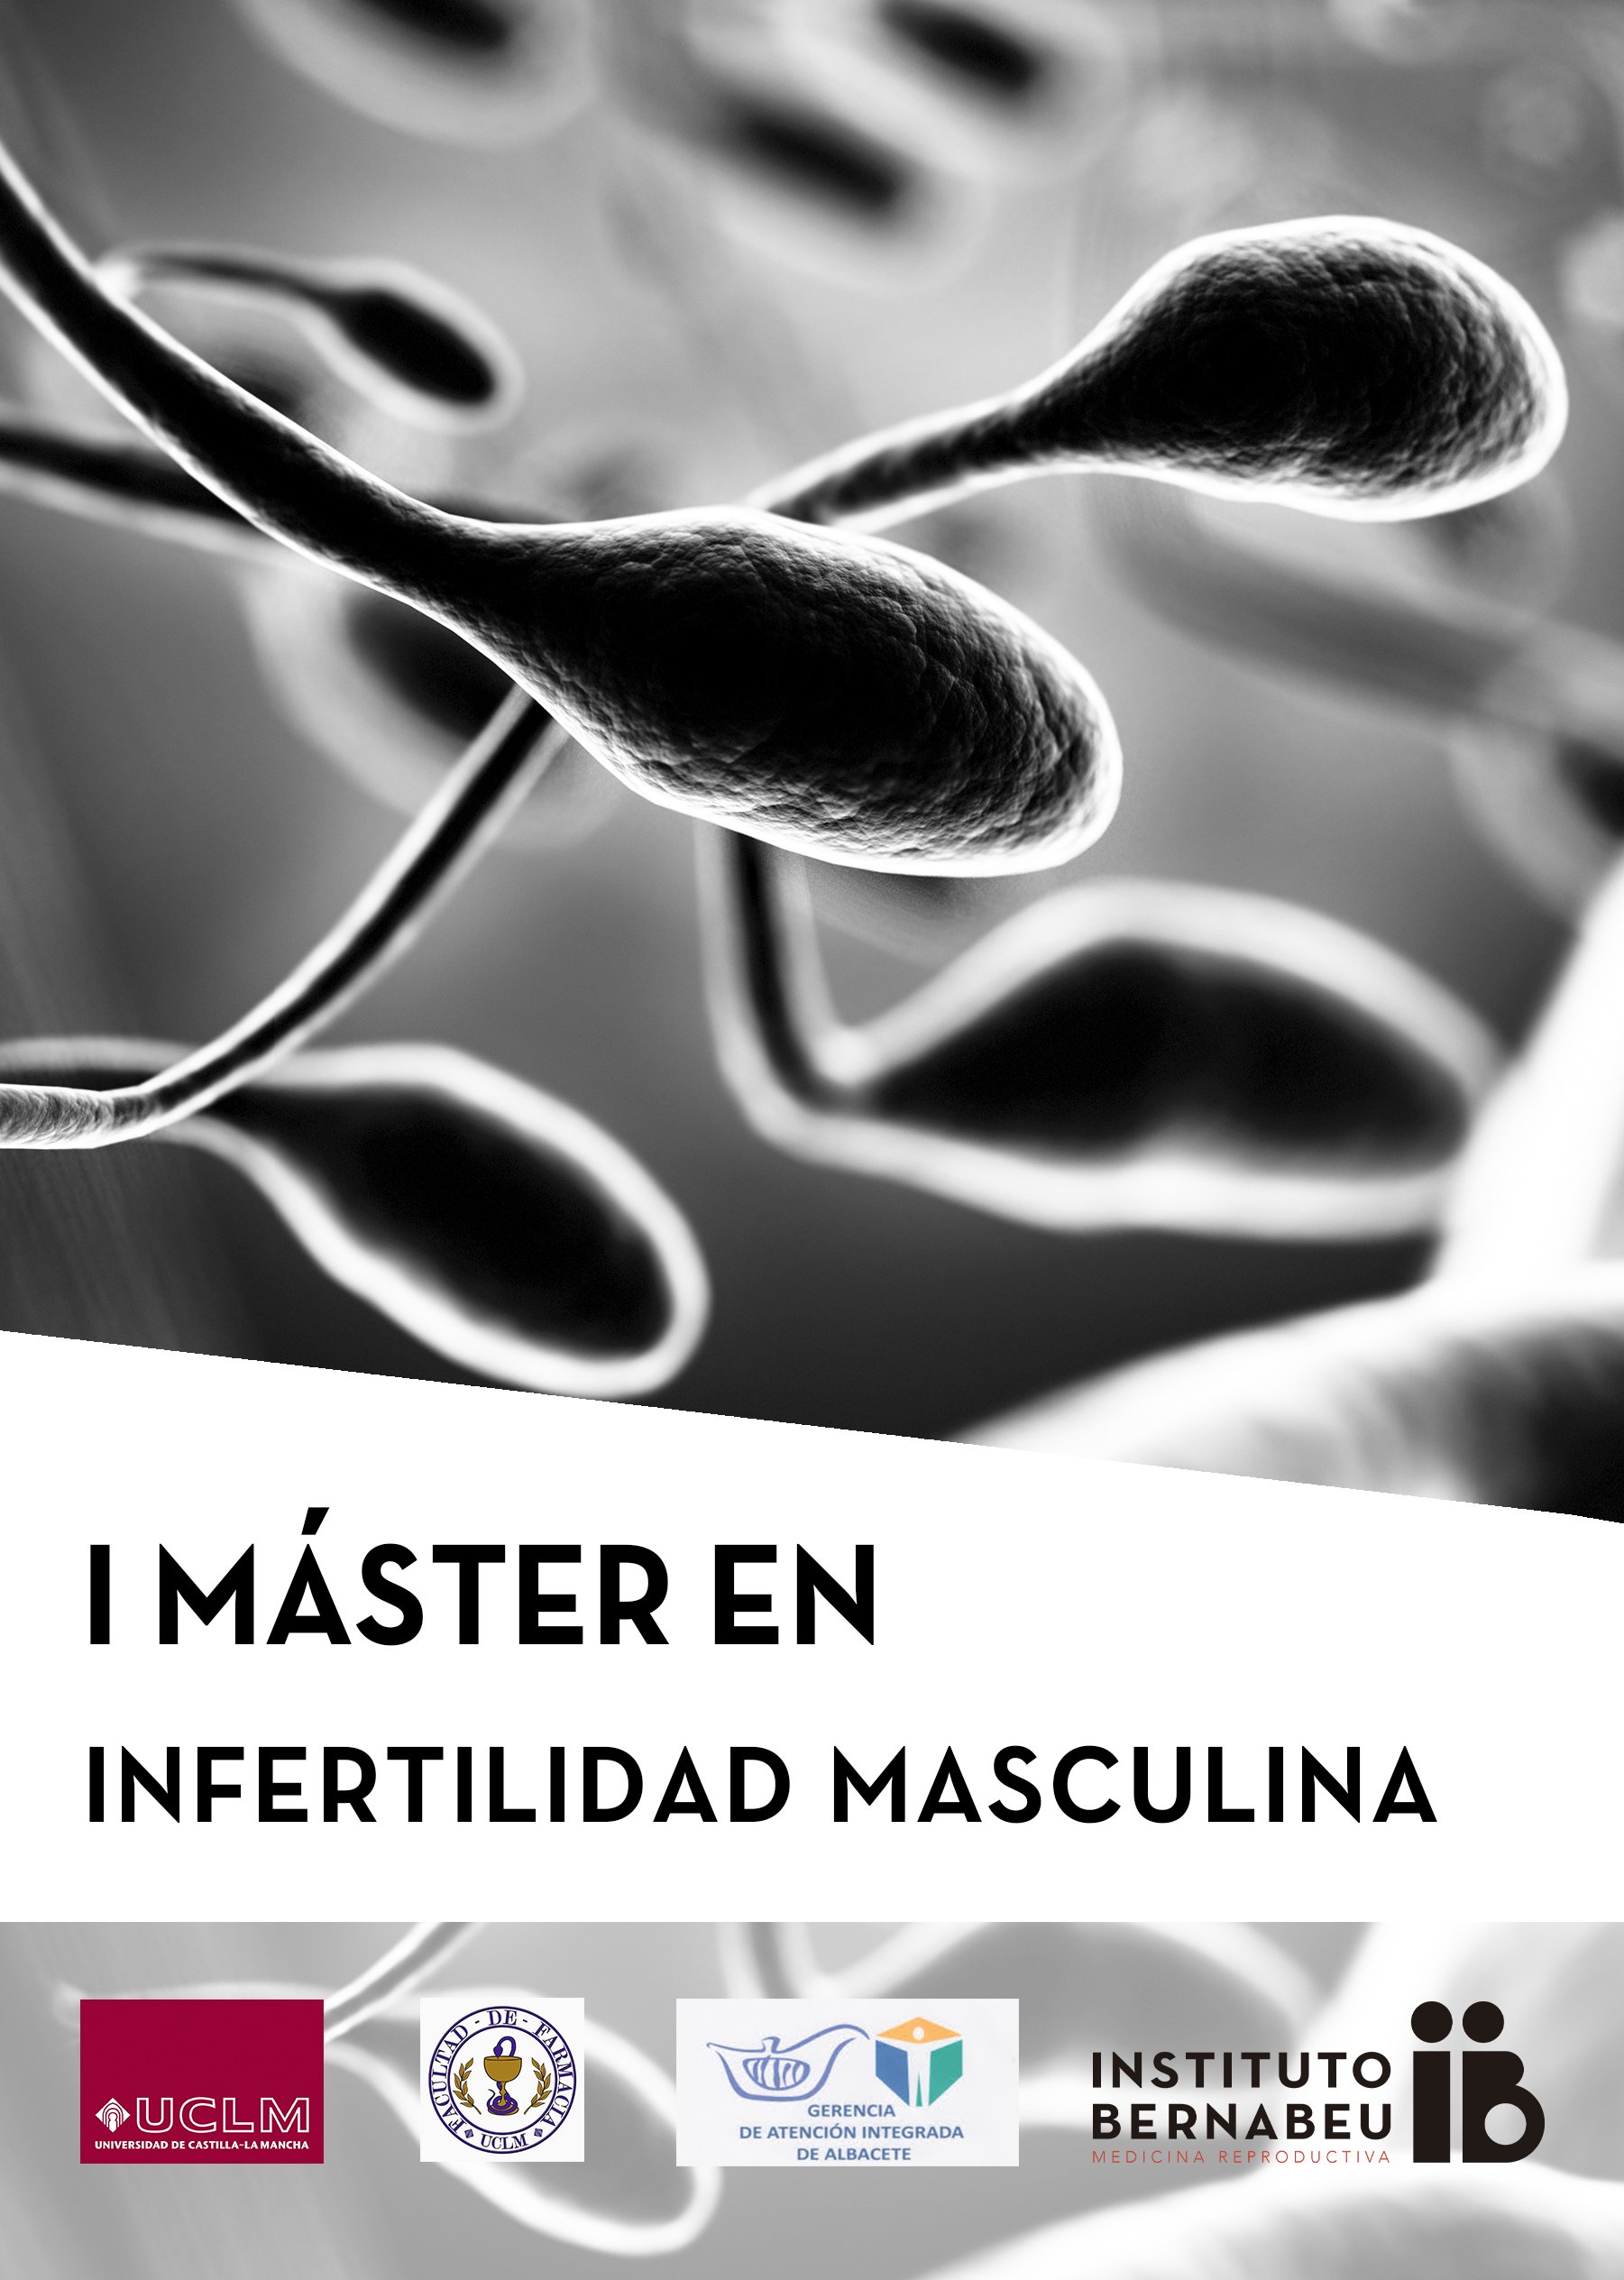 Institute Bernabeu – University of Castilla-La Mancha I Master in Male Infertility